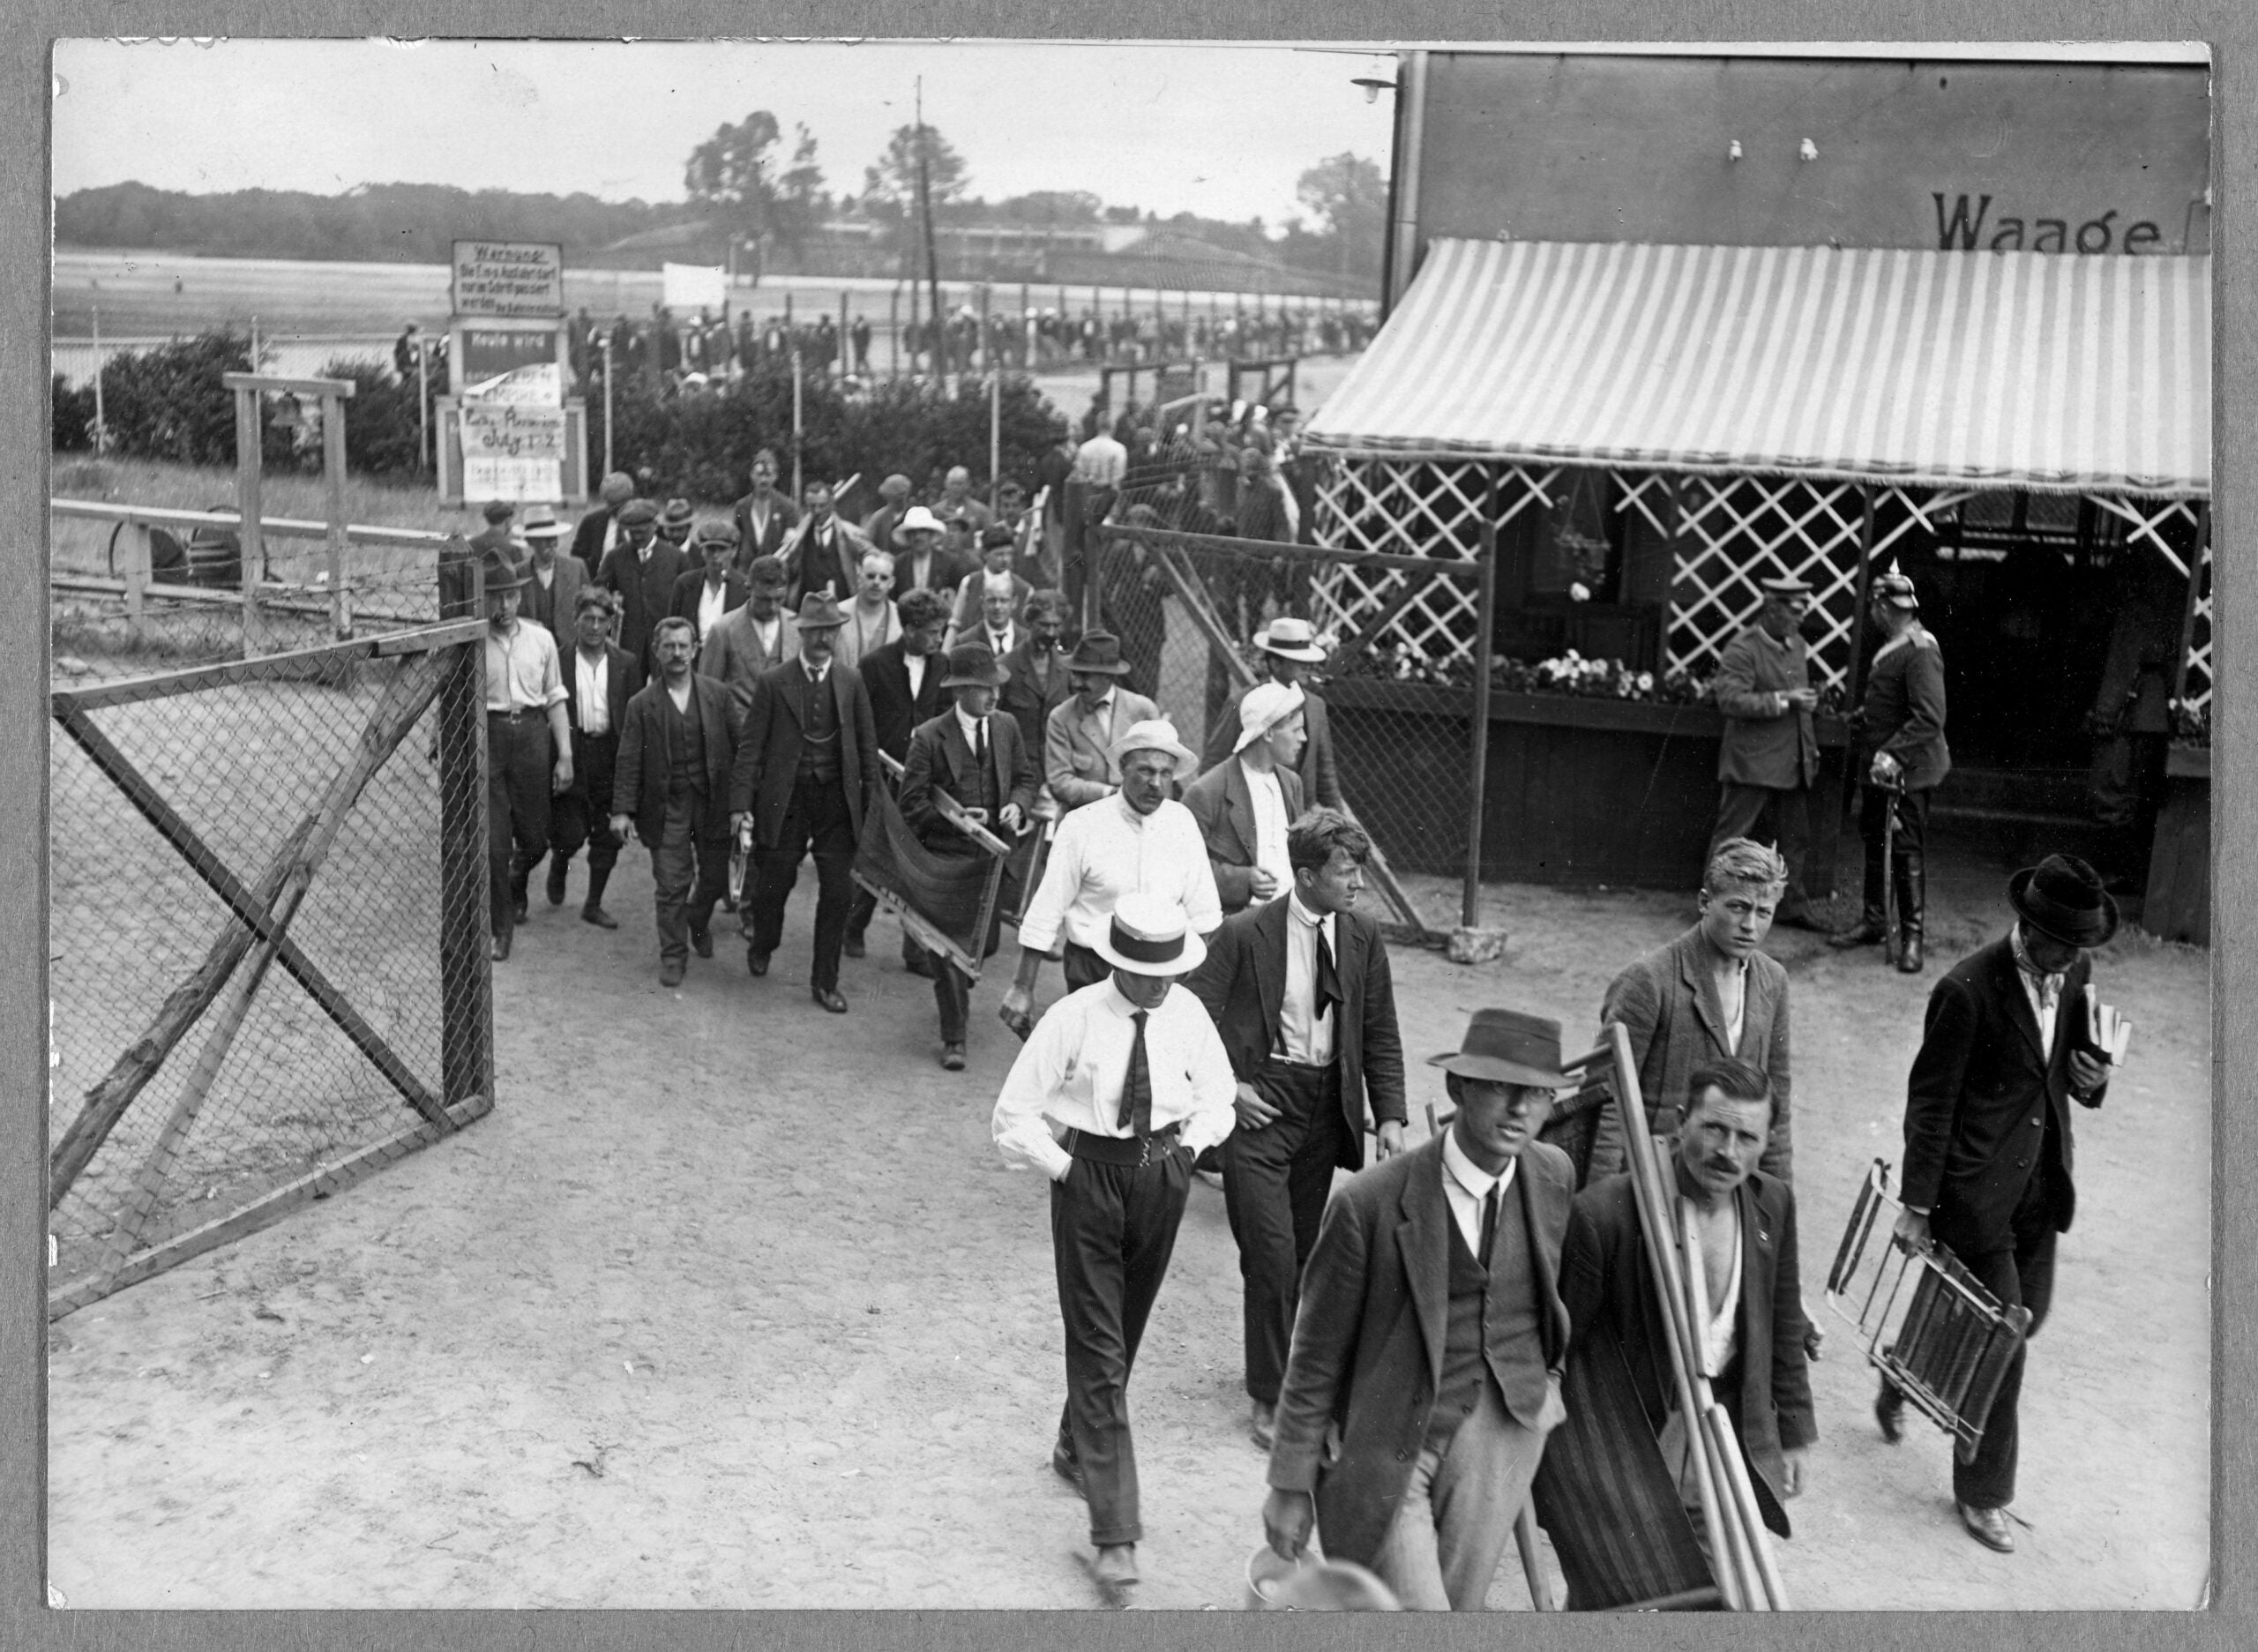 Men passing through a gate in a prison camp